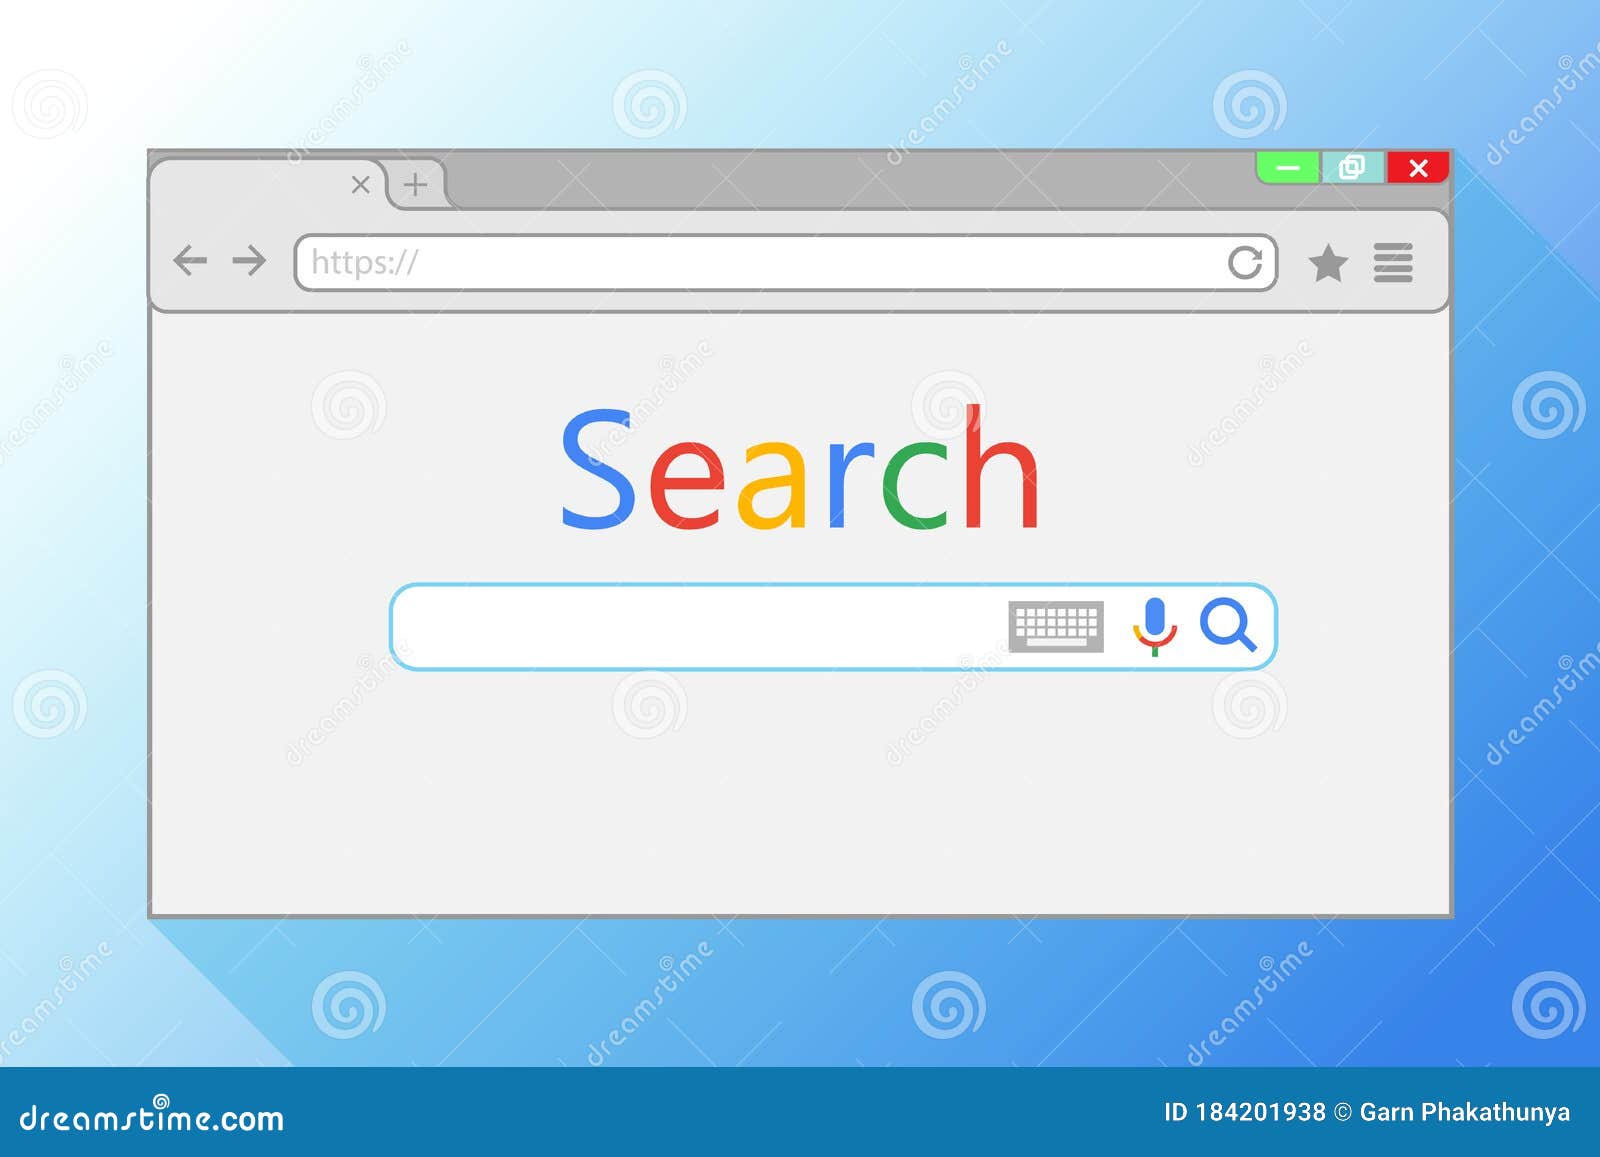 internet explorer search engine download